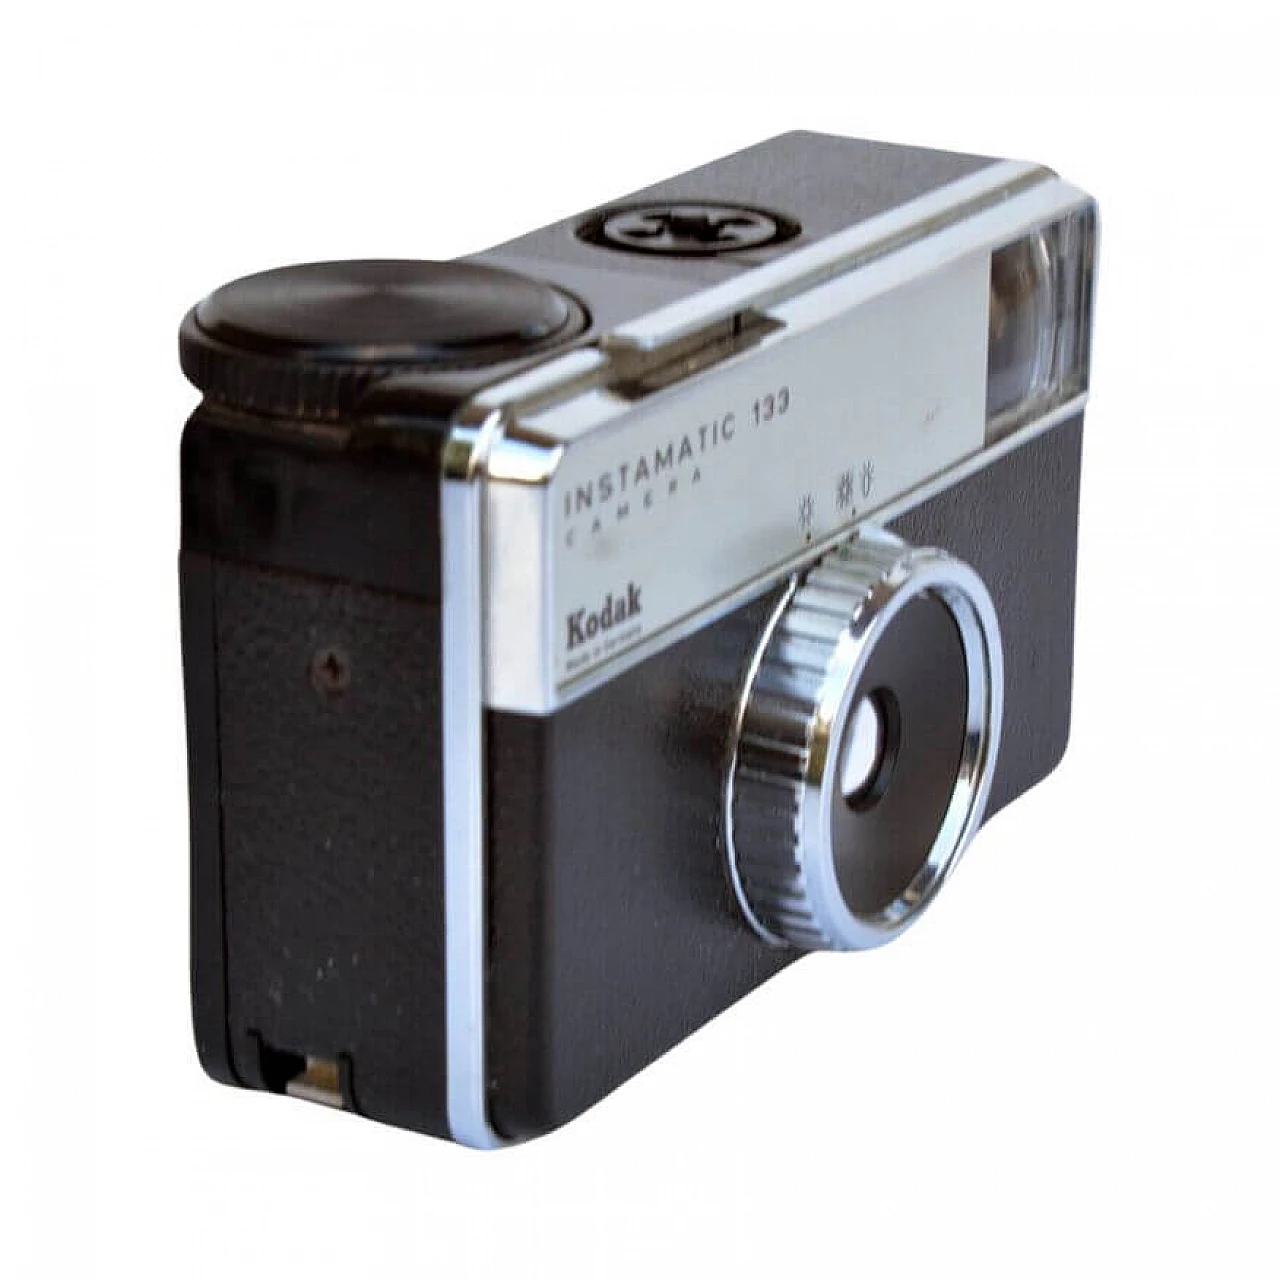 Macchina fotografica analogica Kodak Instamatic 133, anni '70 5